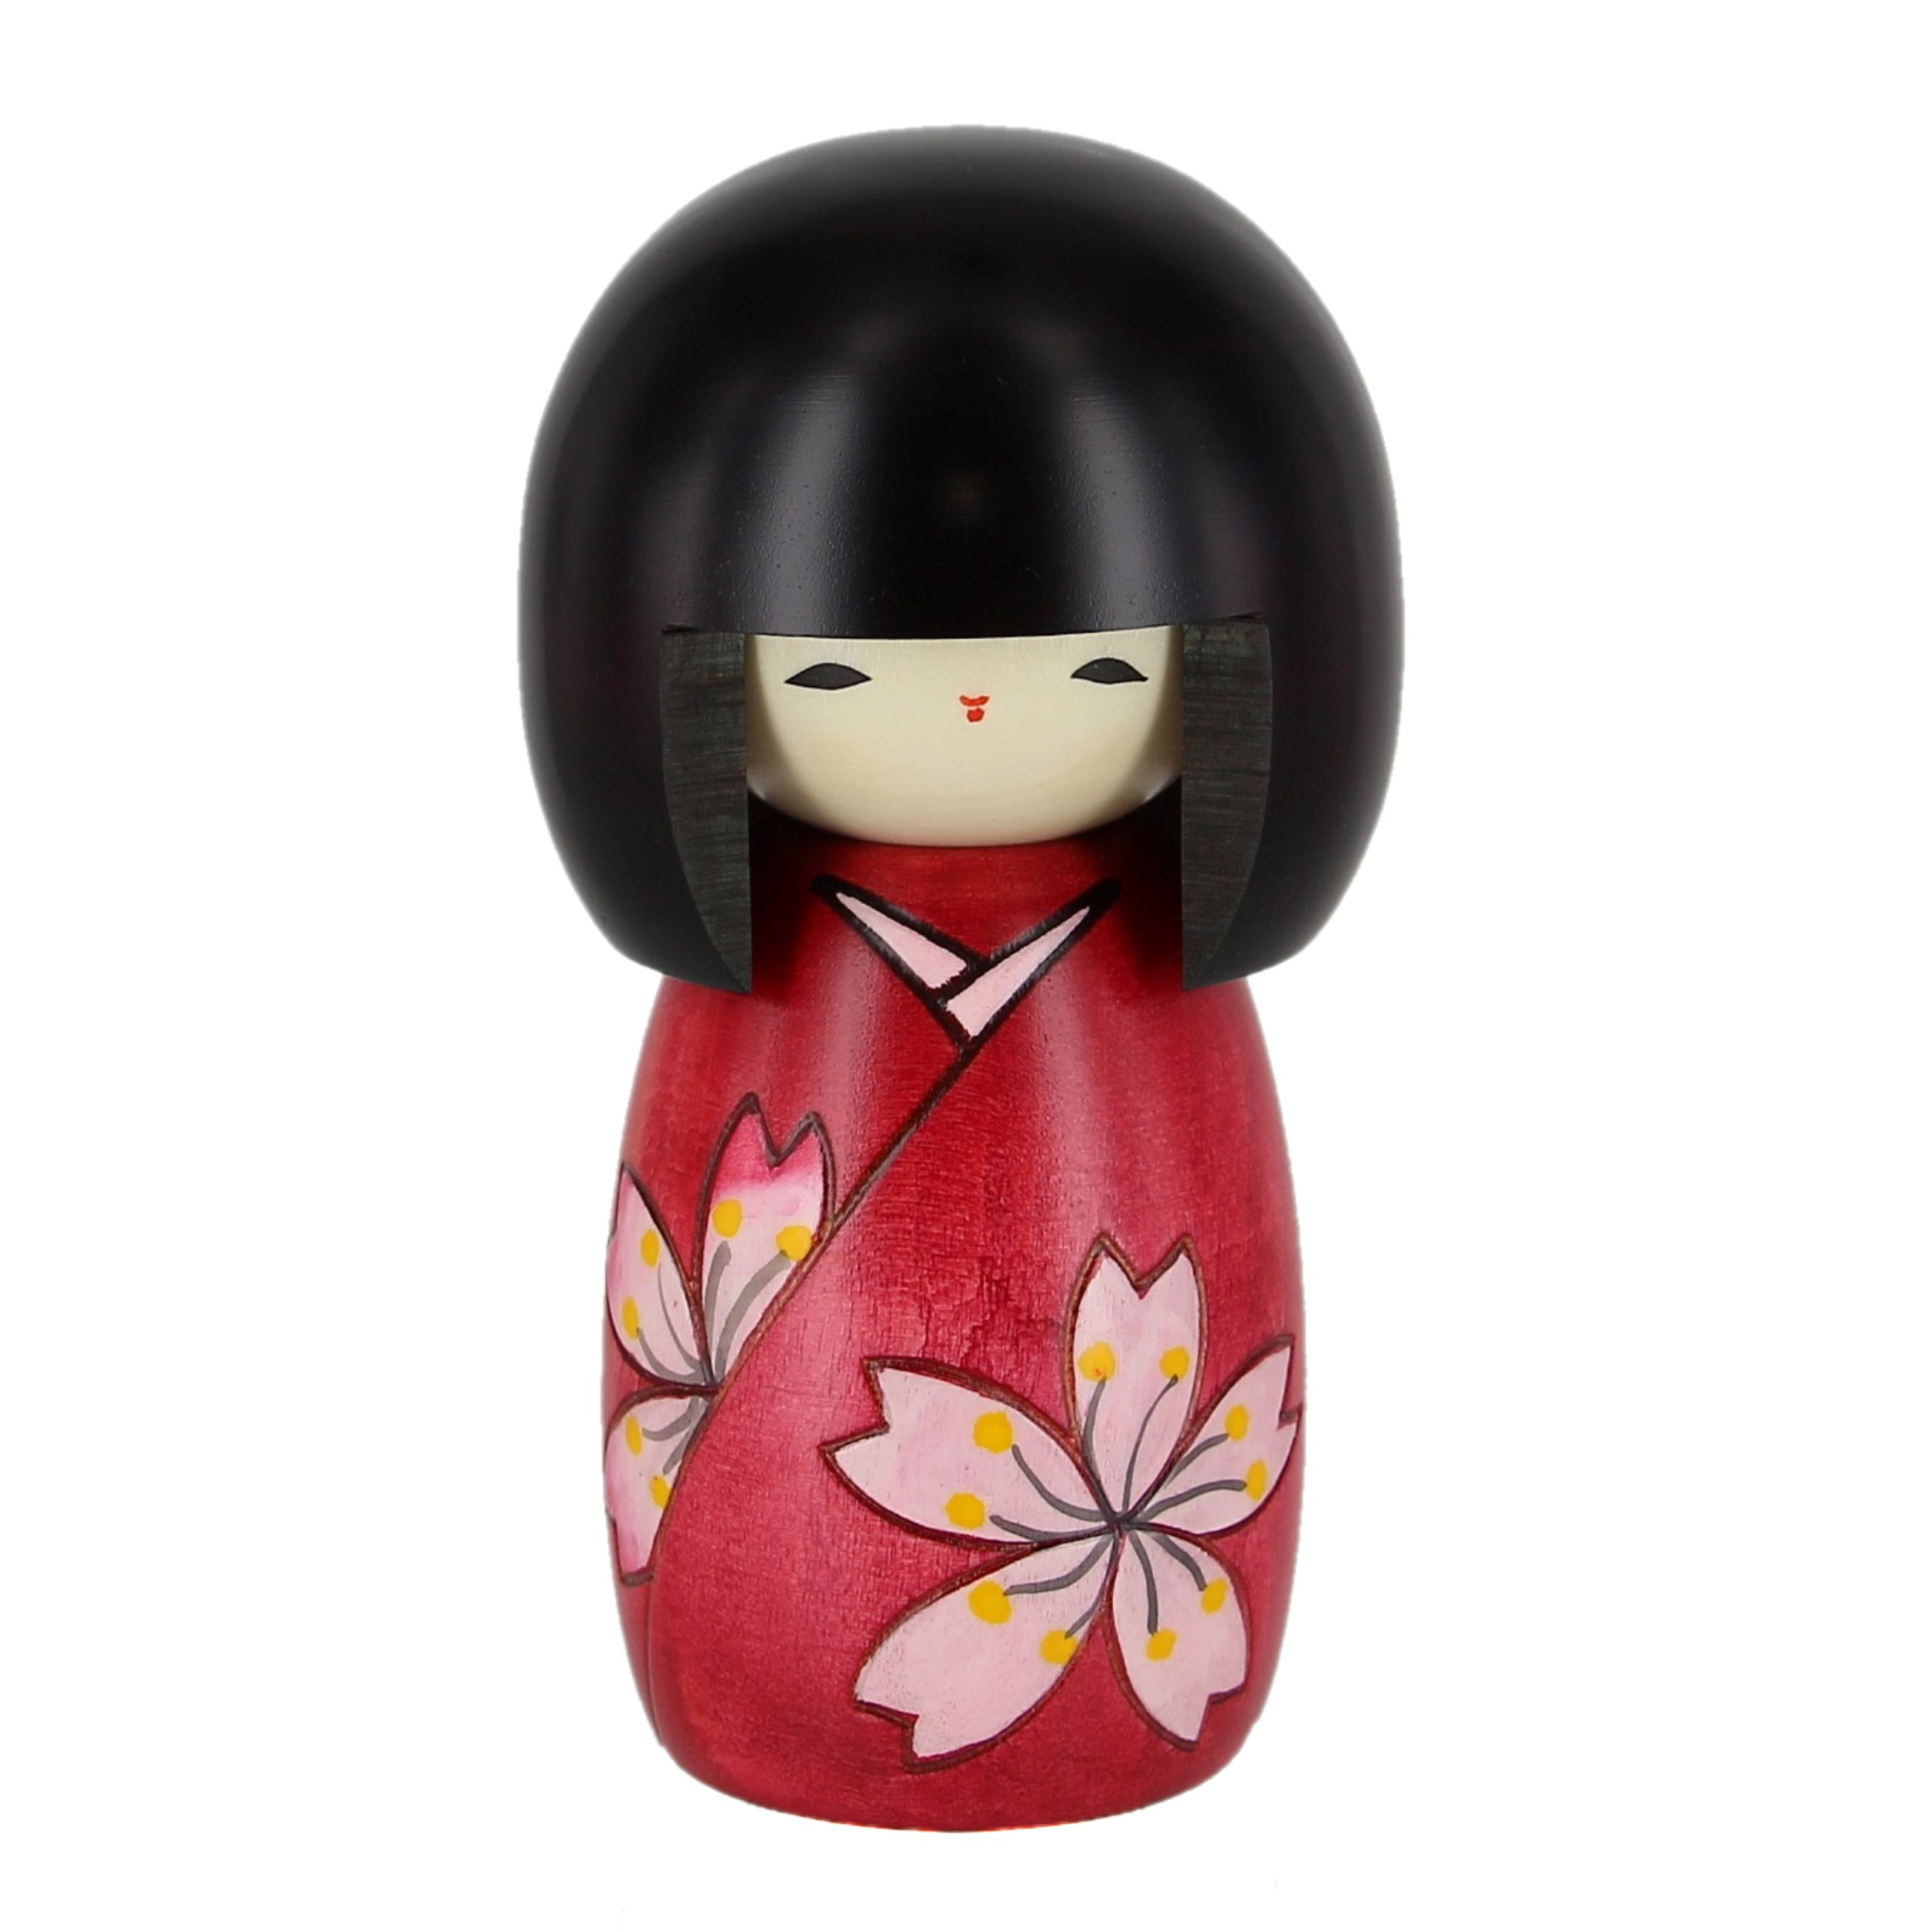 Asian Paper and Fabric Dolls - Japanese, Kimono, Origami